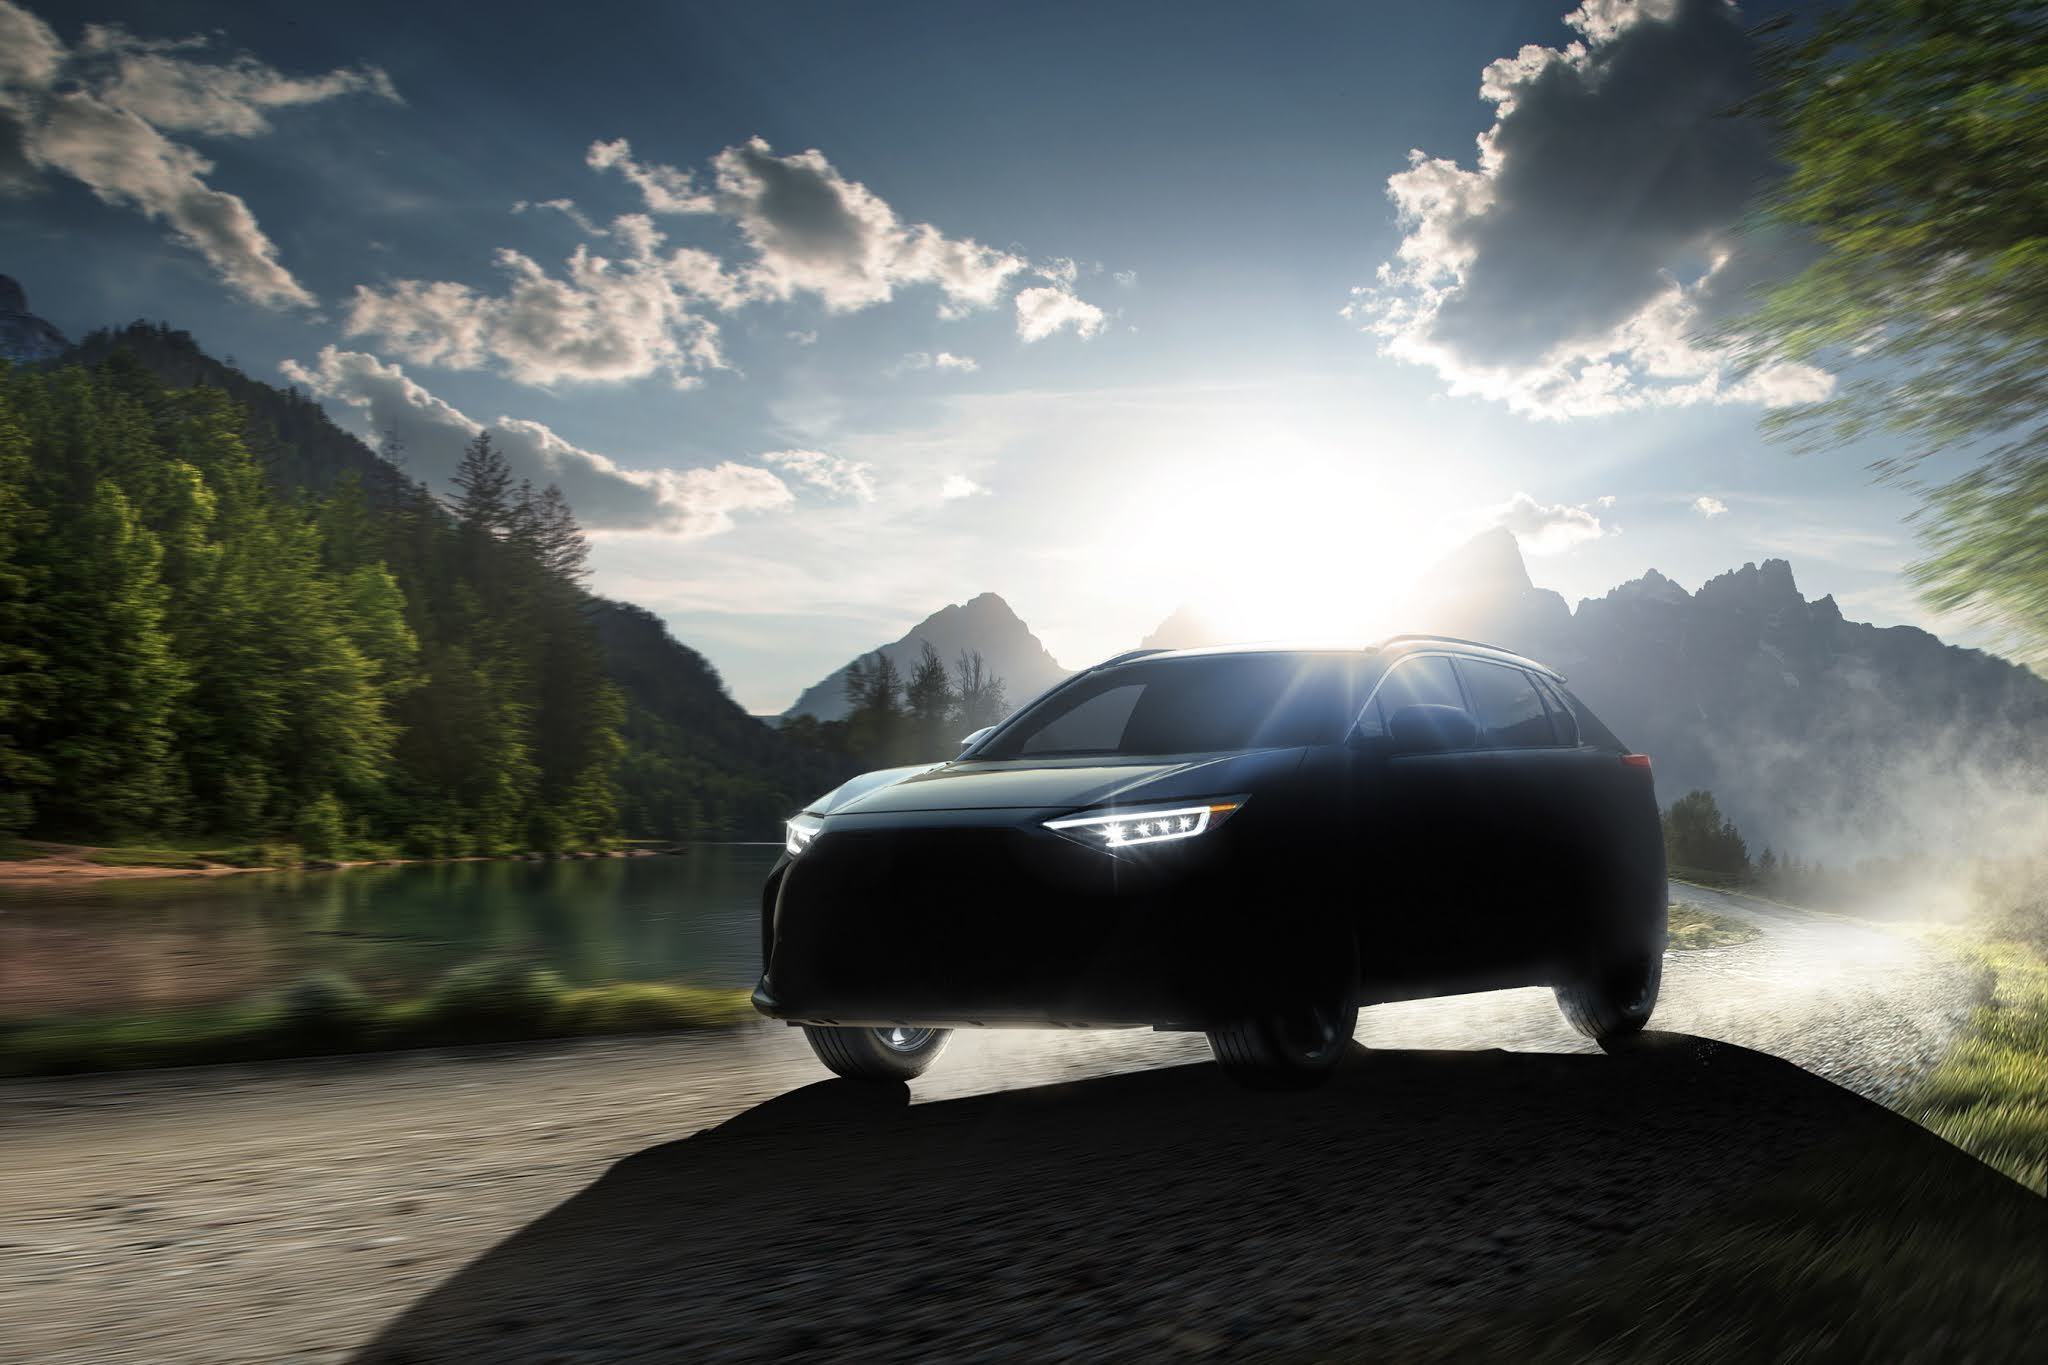 Subaru Names New All-Electric SUV "Solterra"